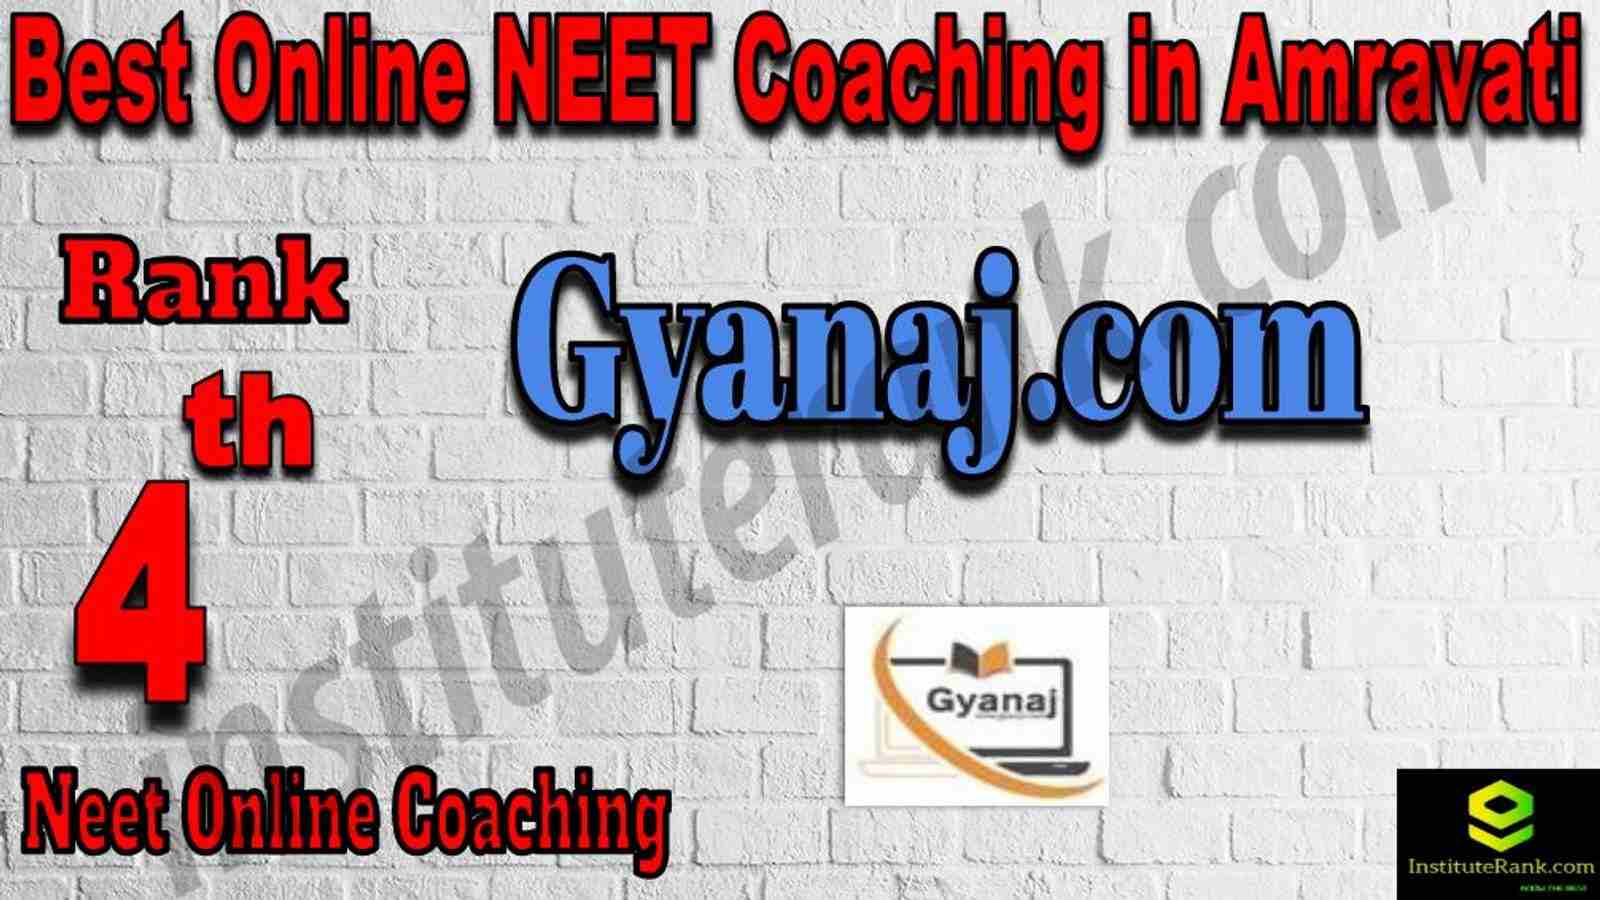 4th Best Online Neet Coaching in Amravati